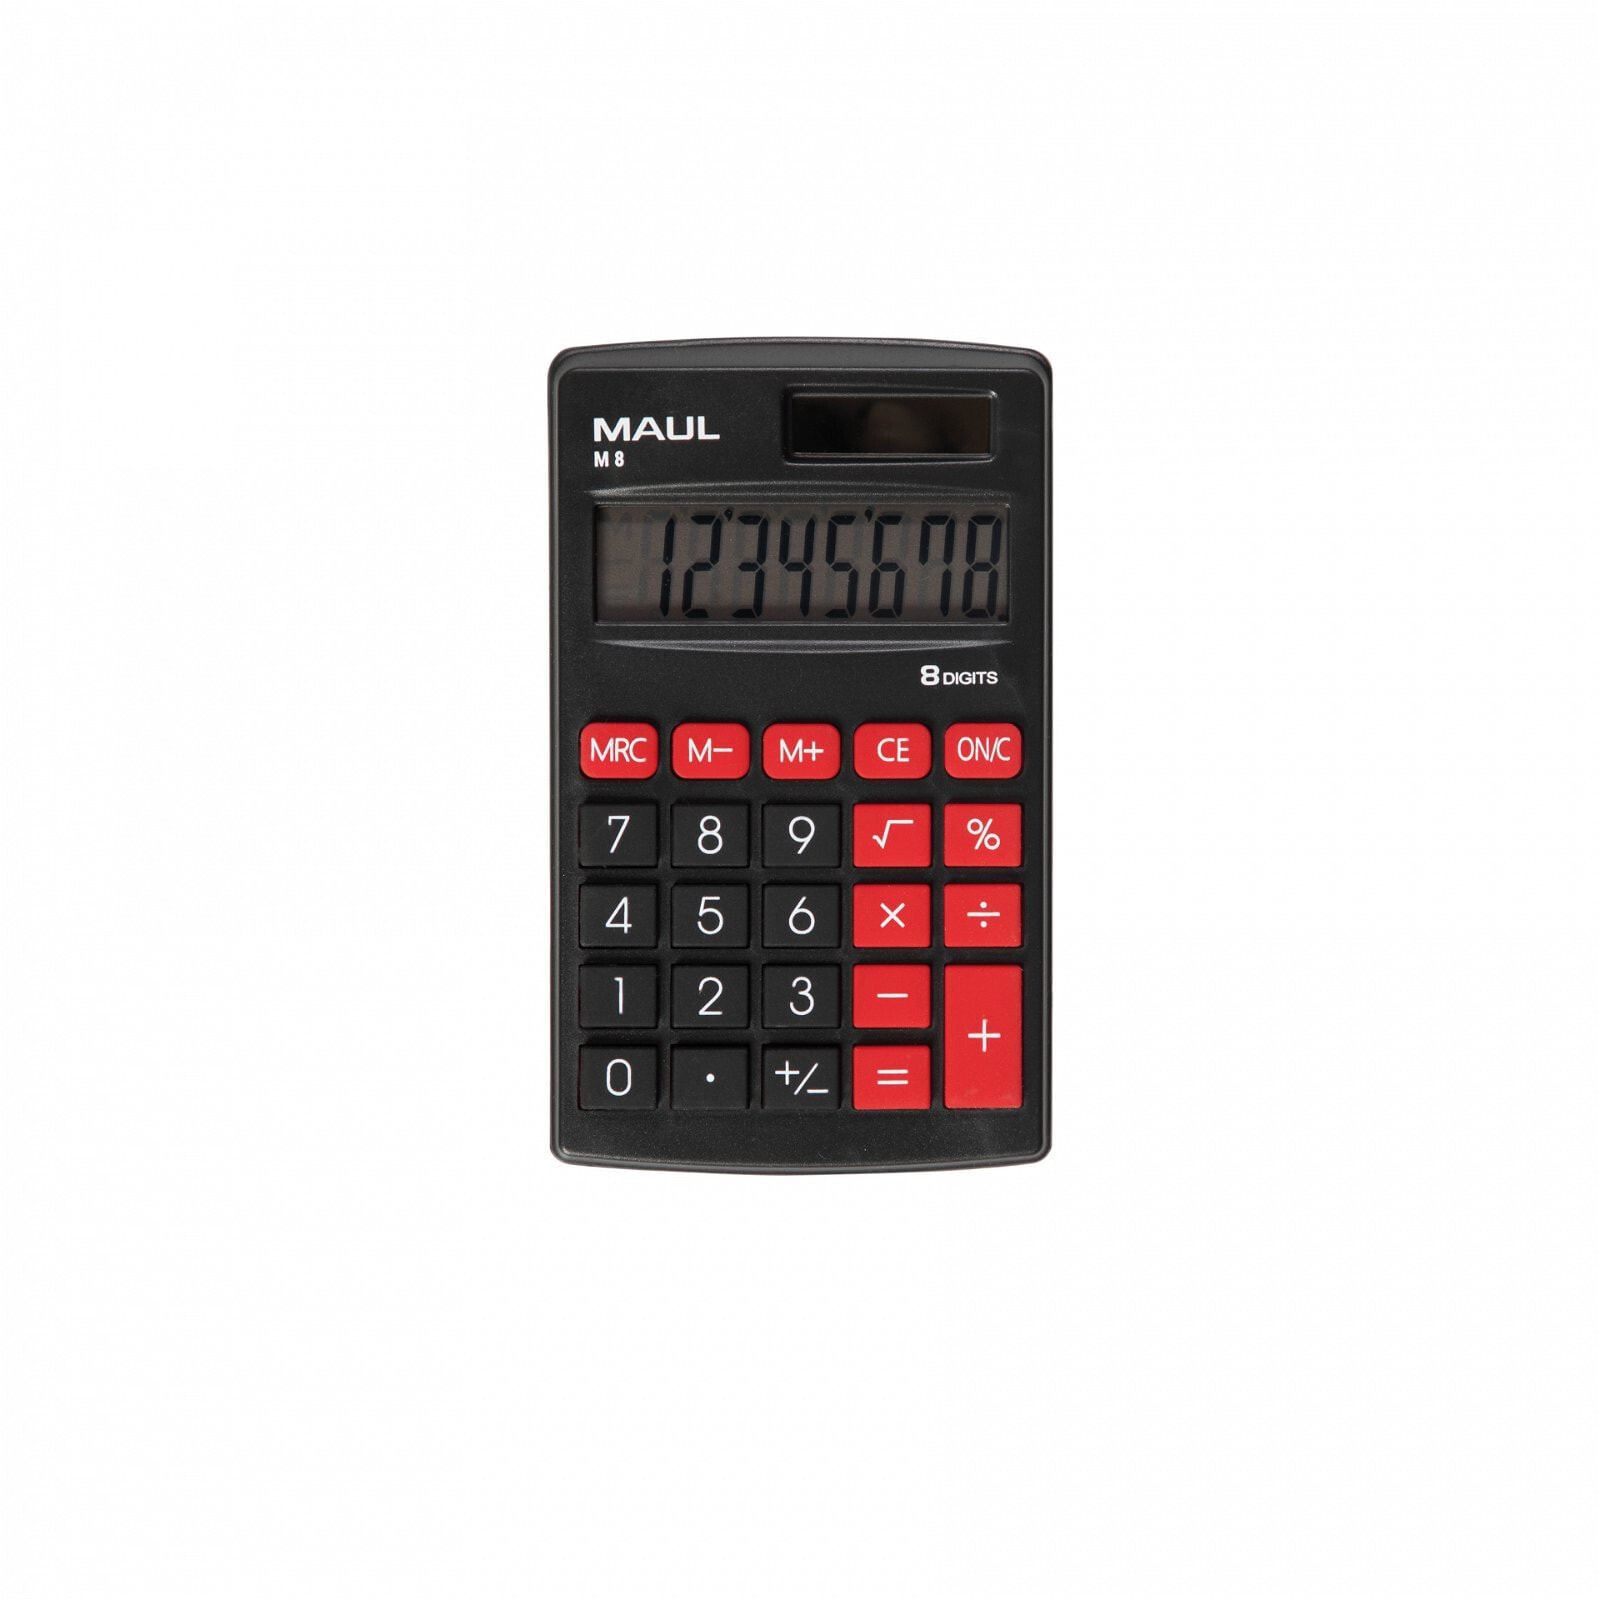 MAUL M 8 - Pocket - Display - 8 digits - 1 lines - Battery/Solar - Black - Red